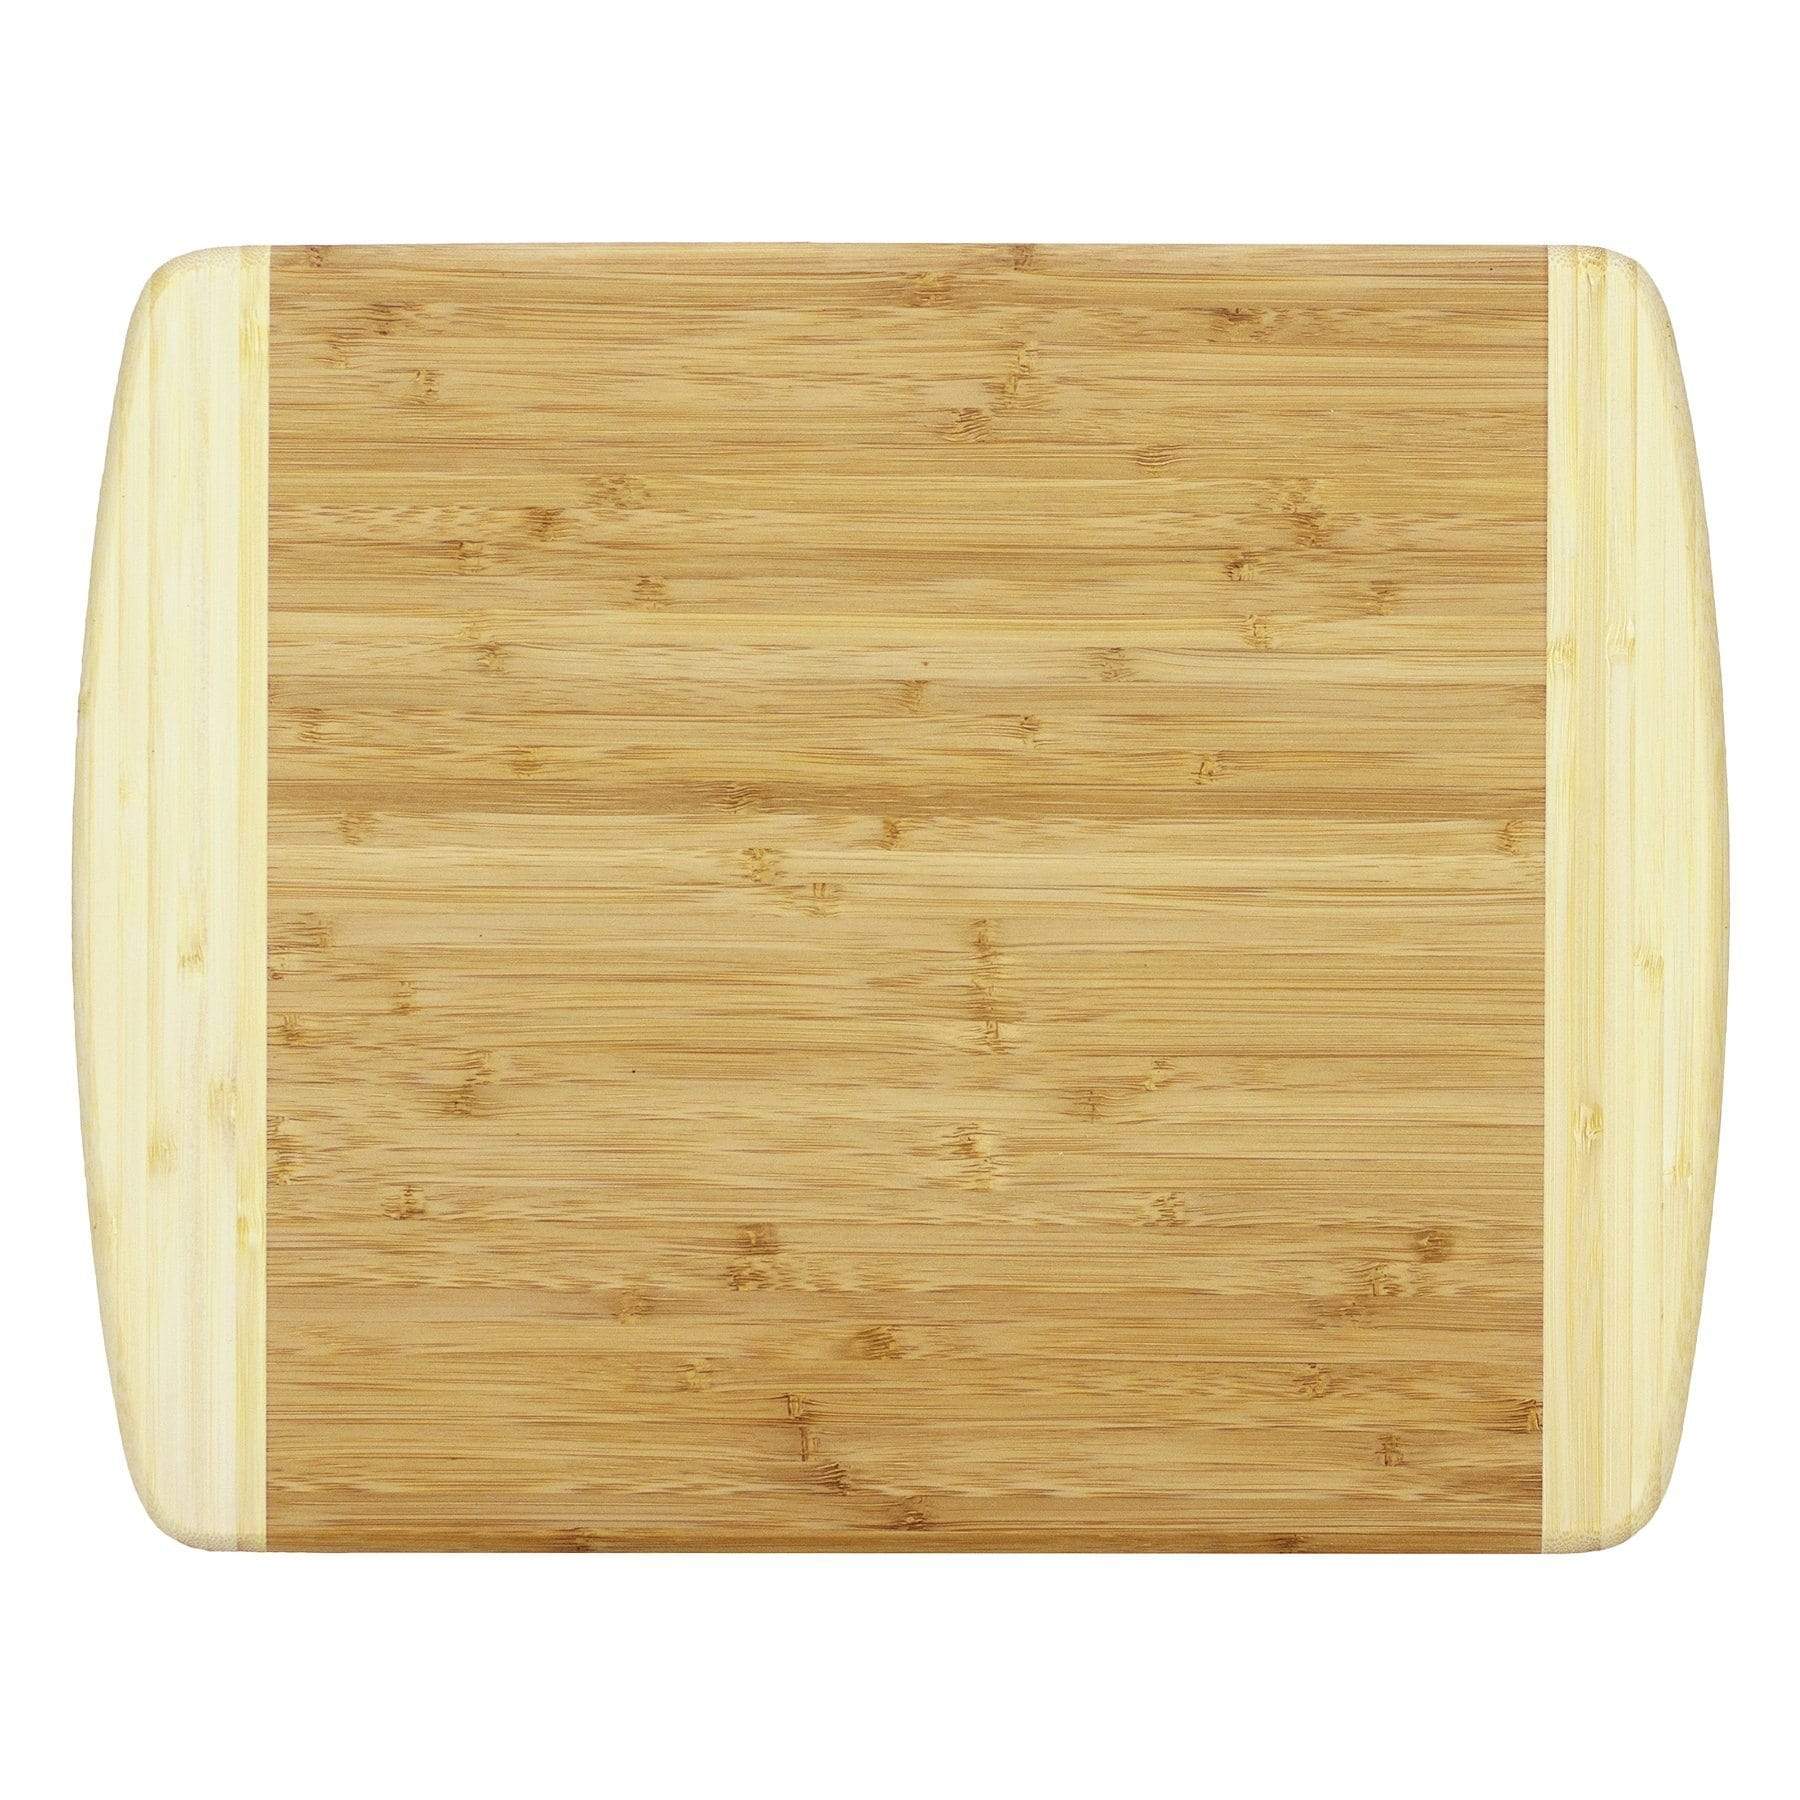 Bamboo Cutting Board - Small Rectangle